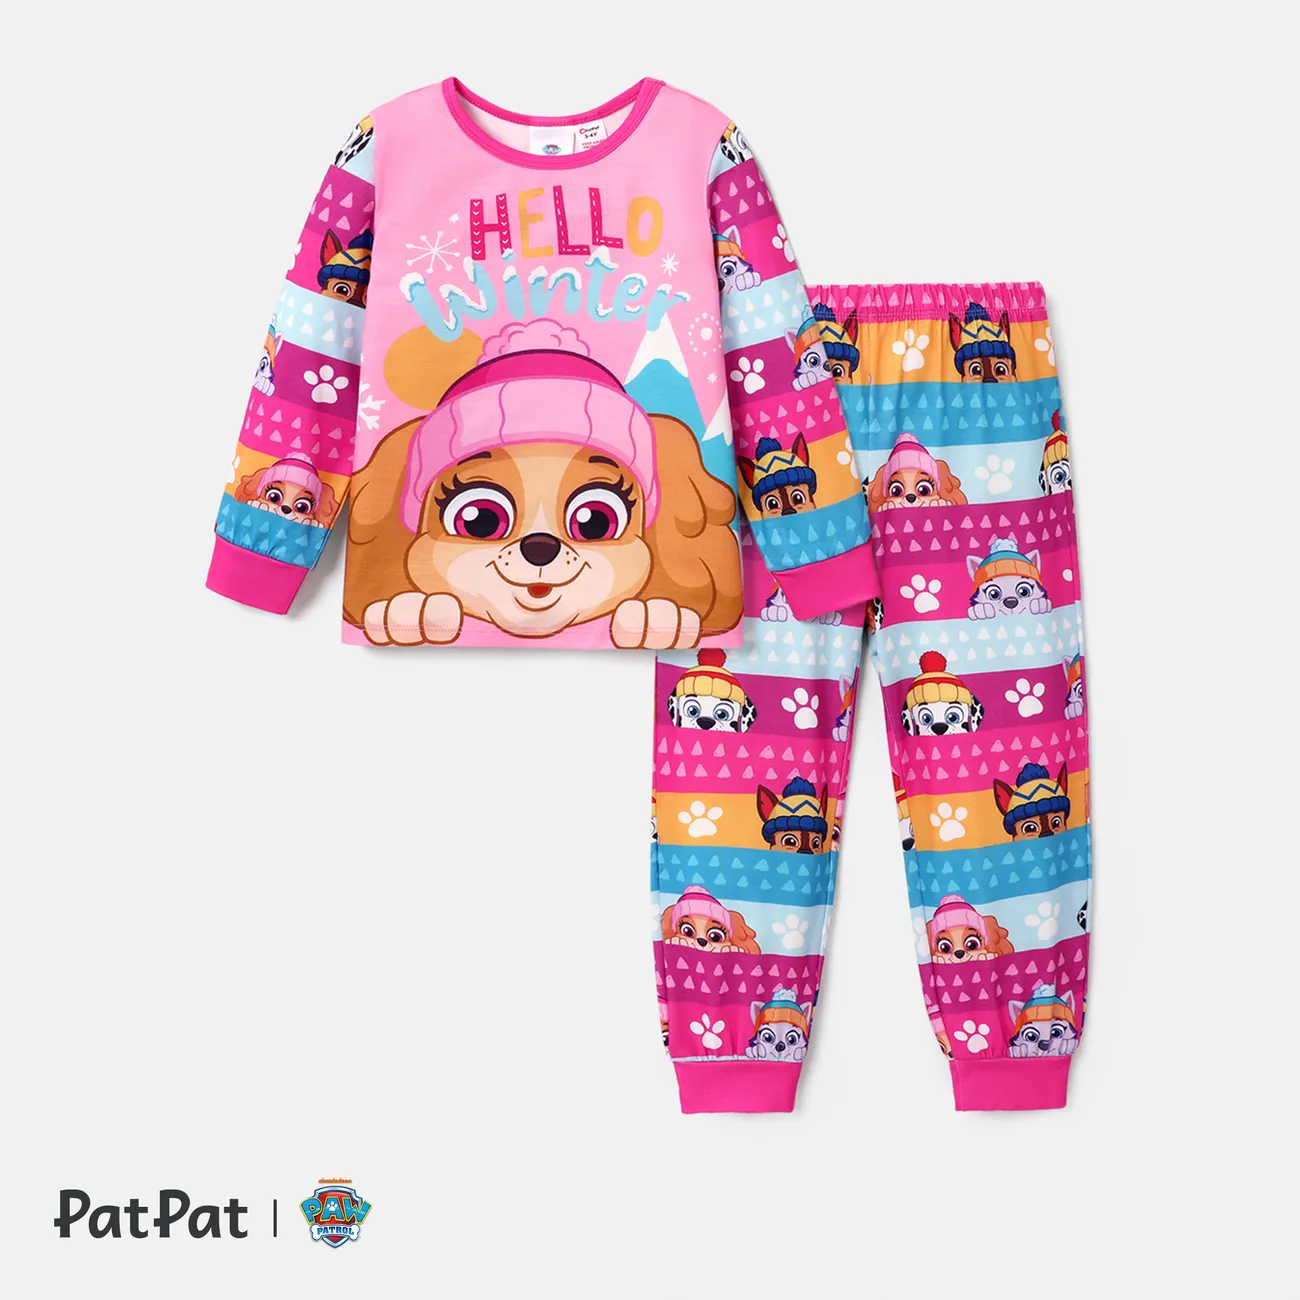 Patrulha Canina 2 unidades Criança Unissexo Infantil Pijamas Rosa big image 1